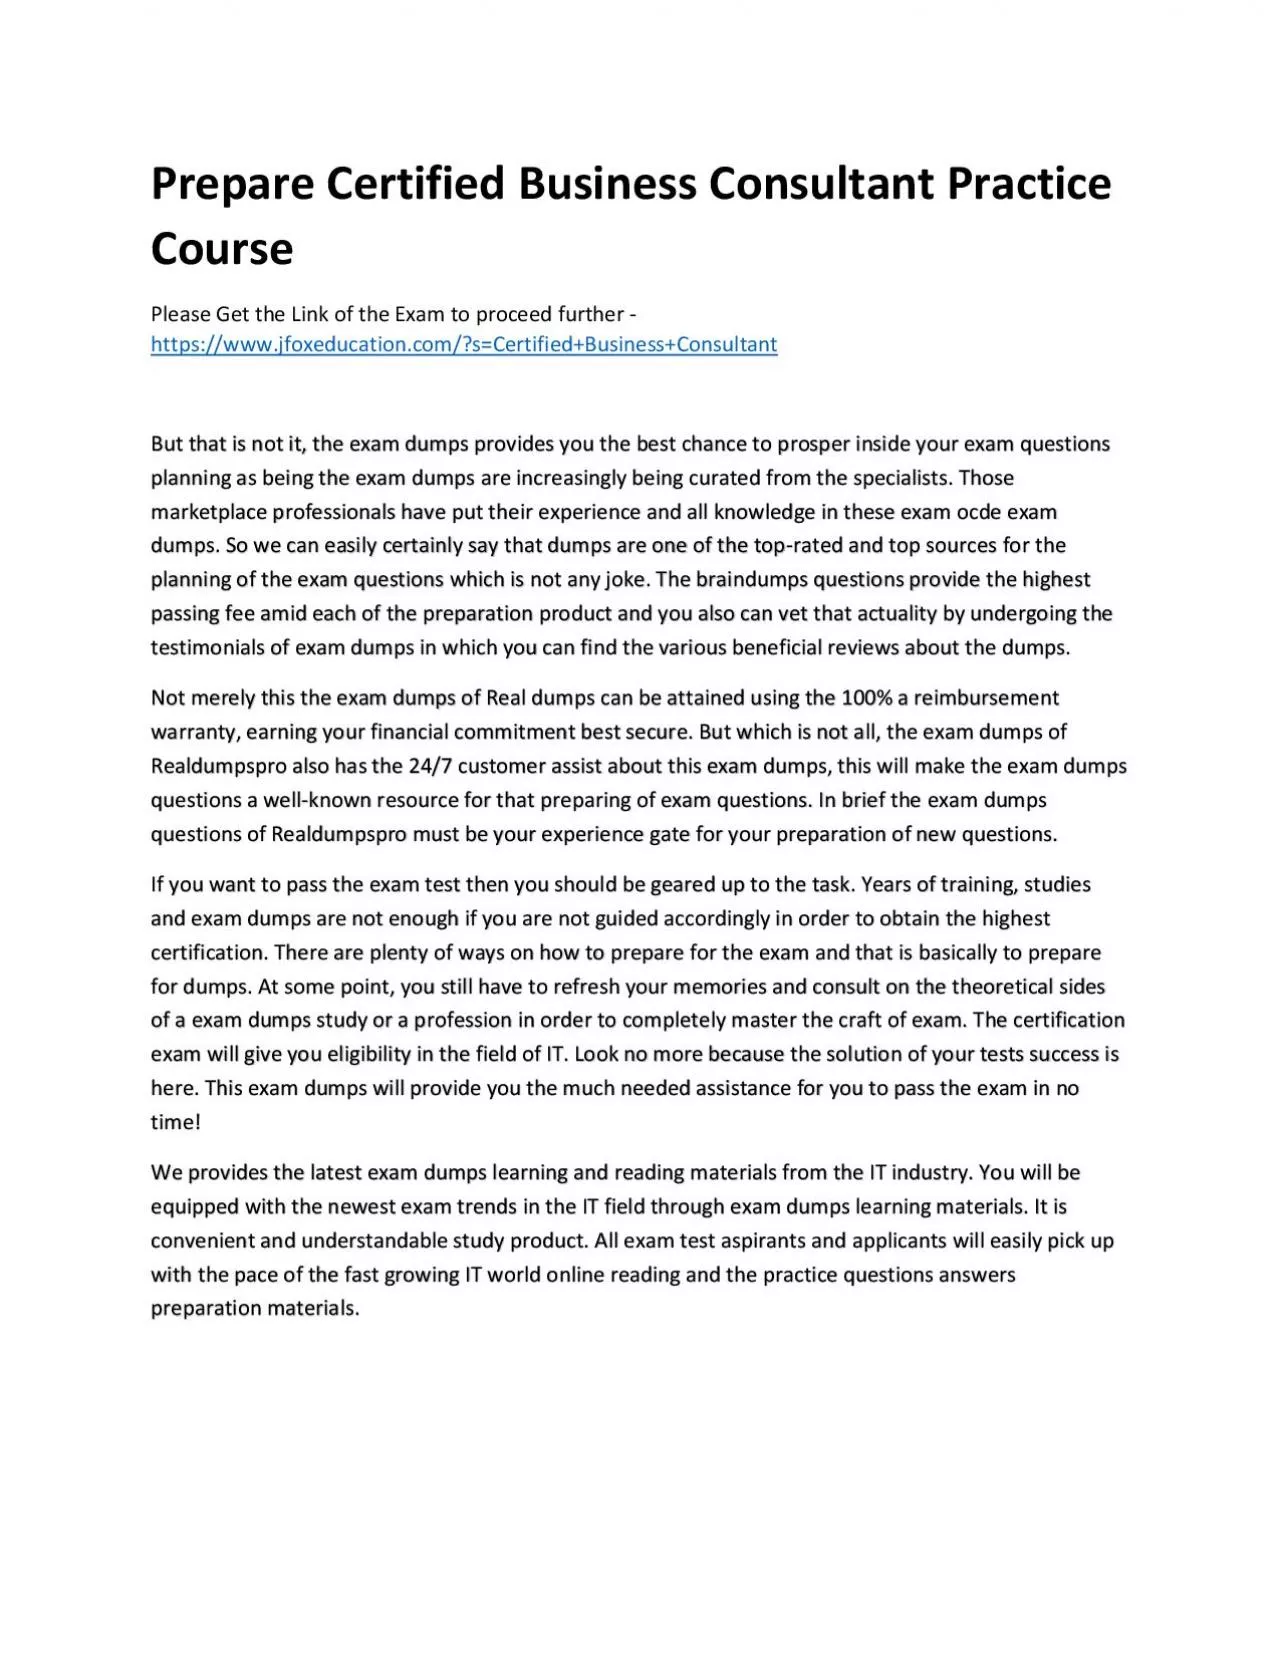 Prepare Certified Business Consultant Practice Course